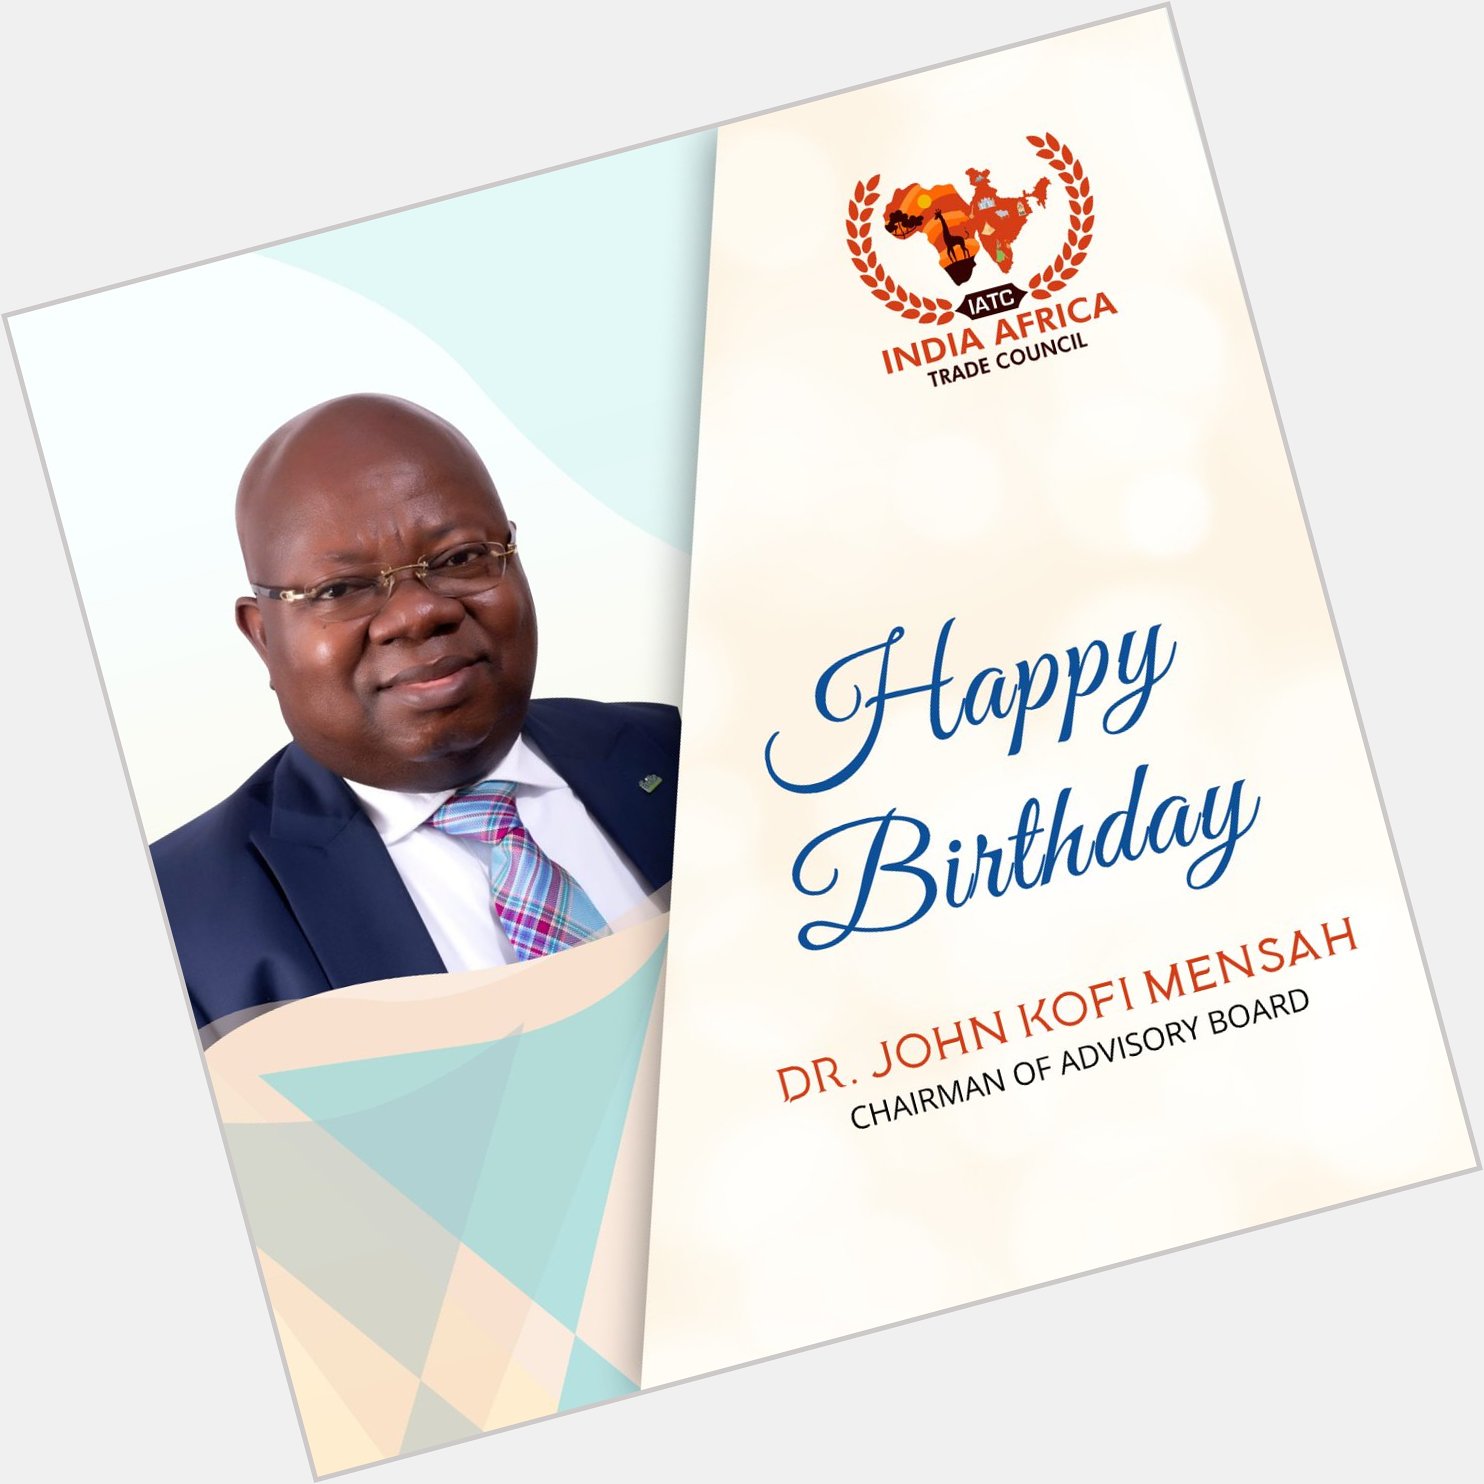 Happy Birthday Dr. John Kofi Mensah,  Managing Director at ADB and Chairman of IATC Advisory Board. 